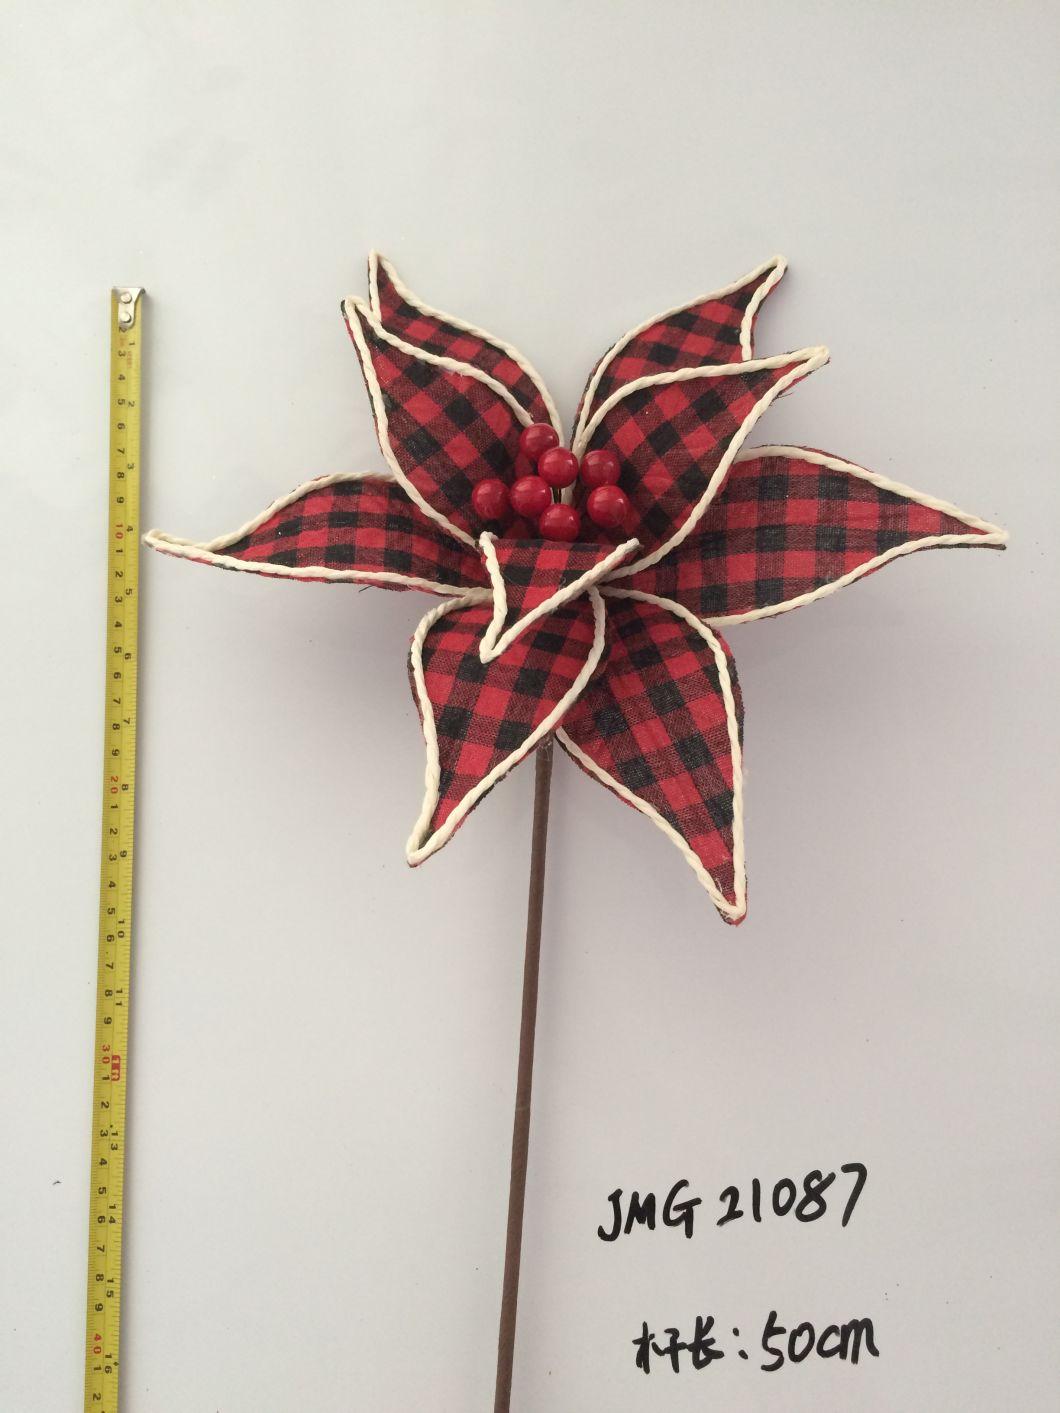 Ytcf106 Velvet Material Poinsettia Flower with Factory Price